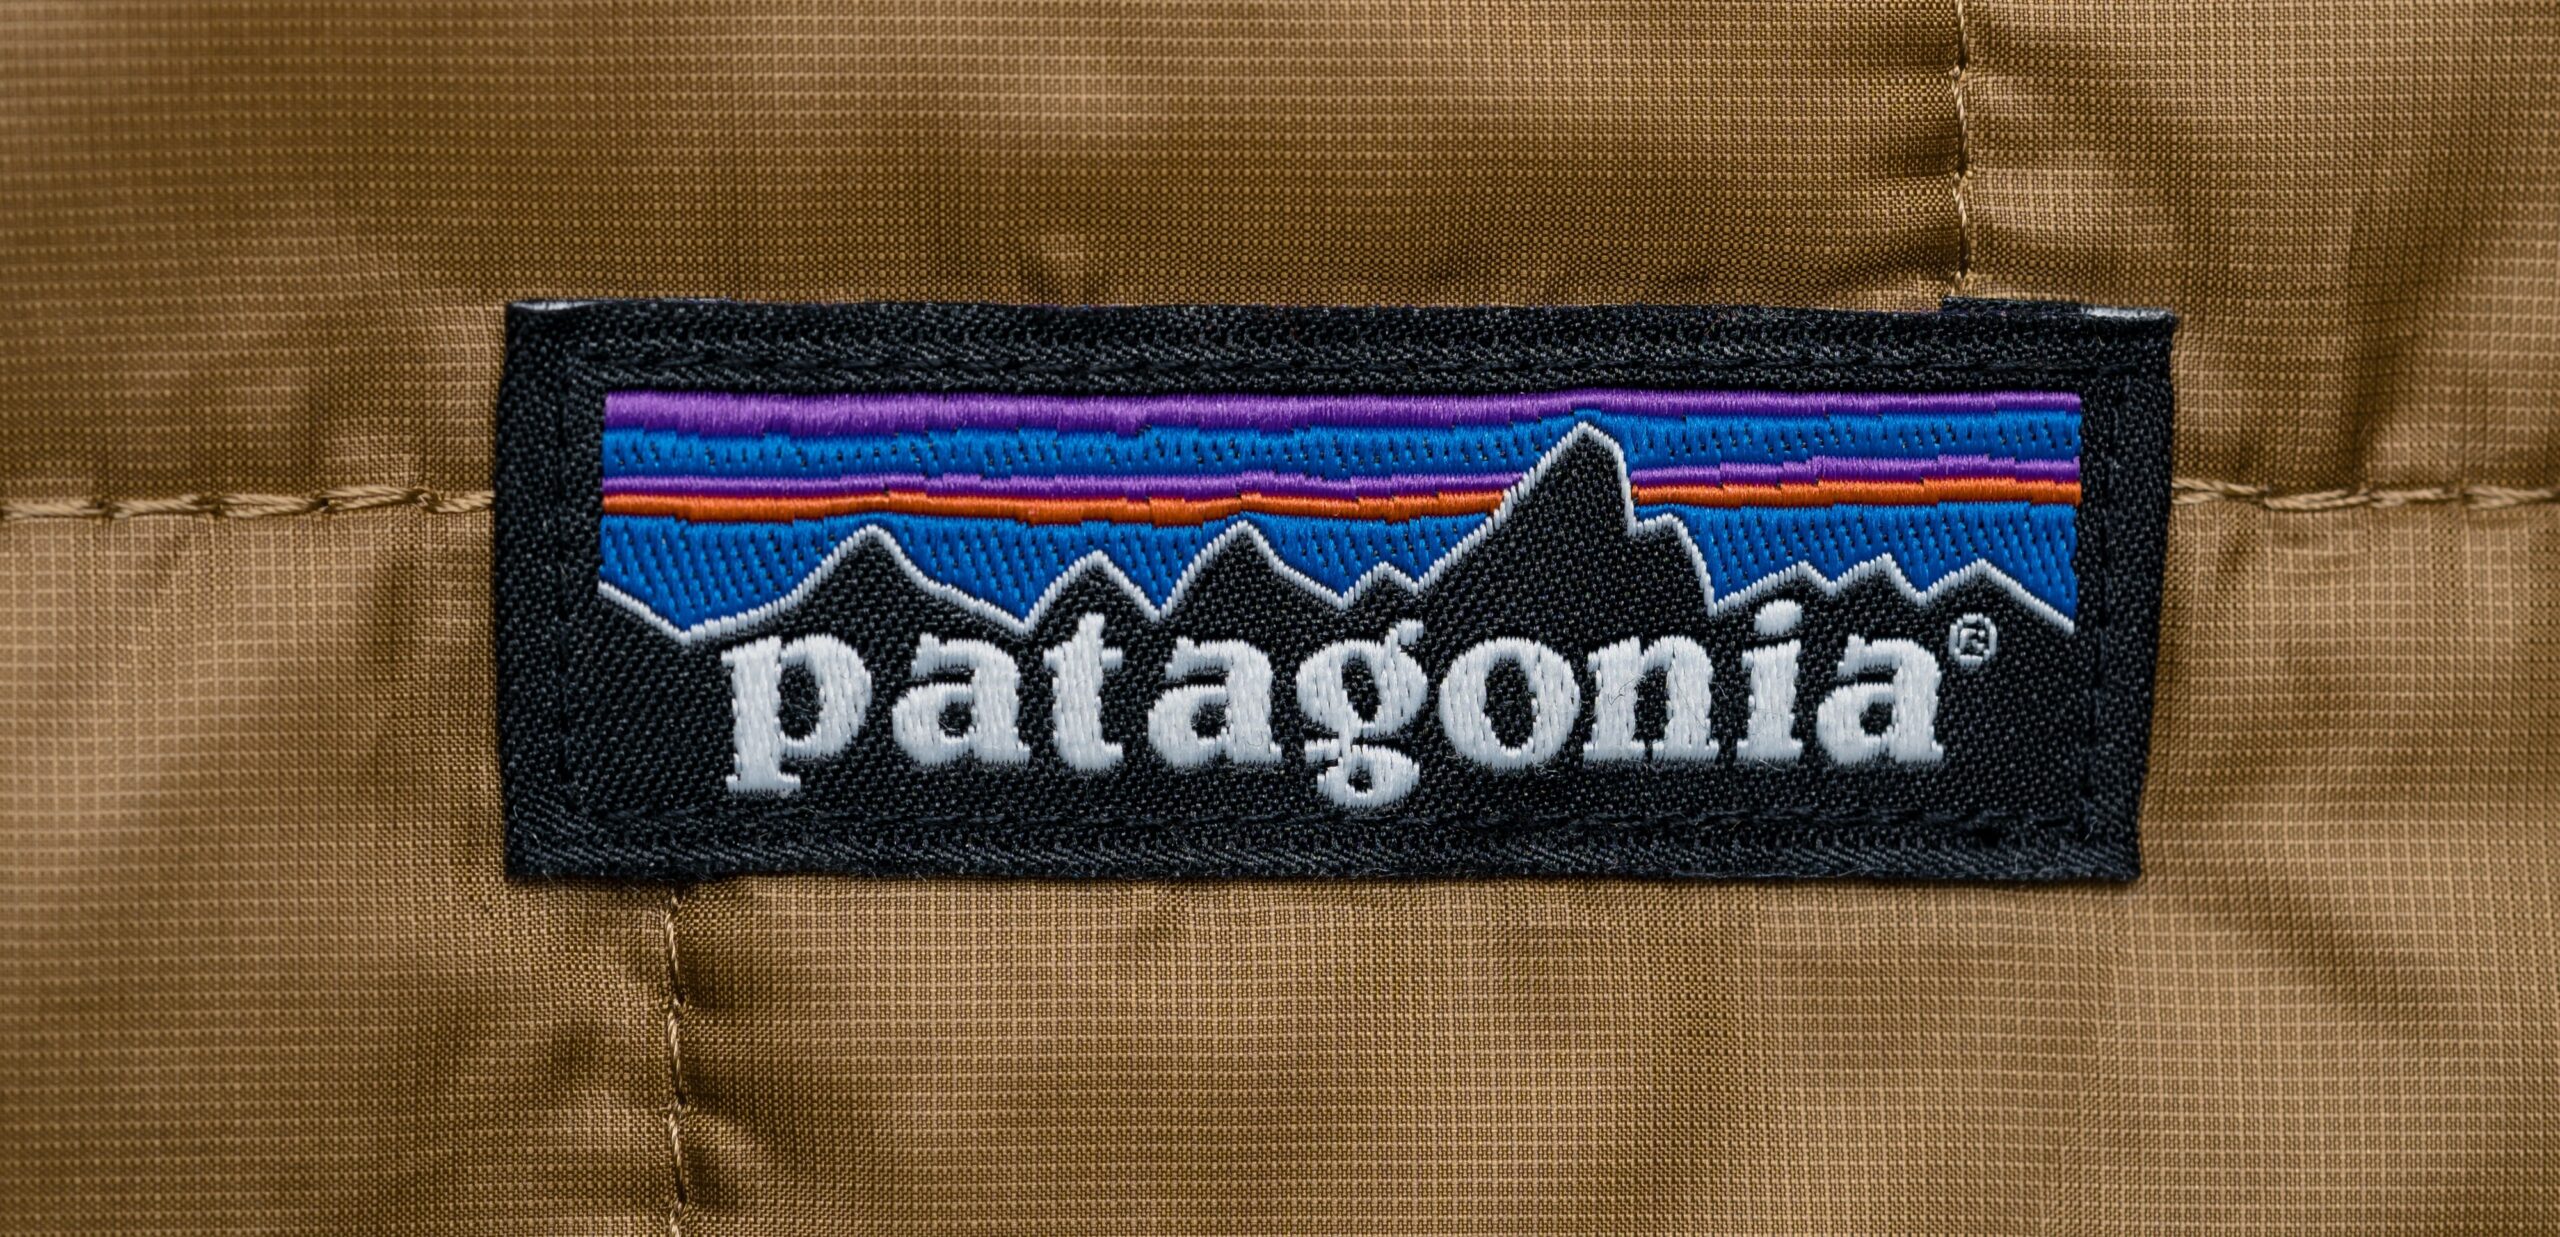 Patagonia Leads Circular Fashion Study, But Brands Not Making Progress ...